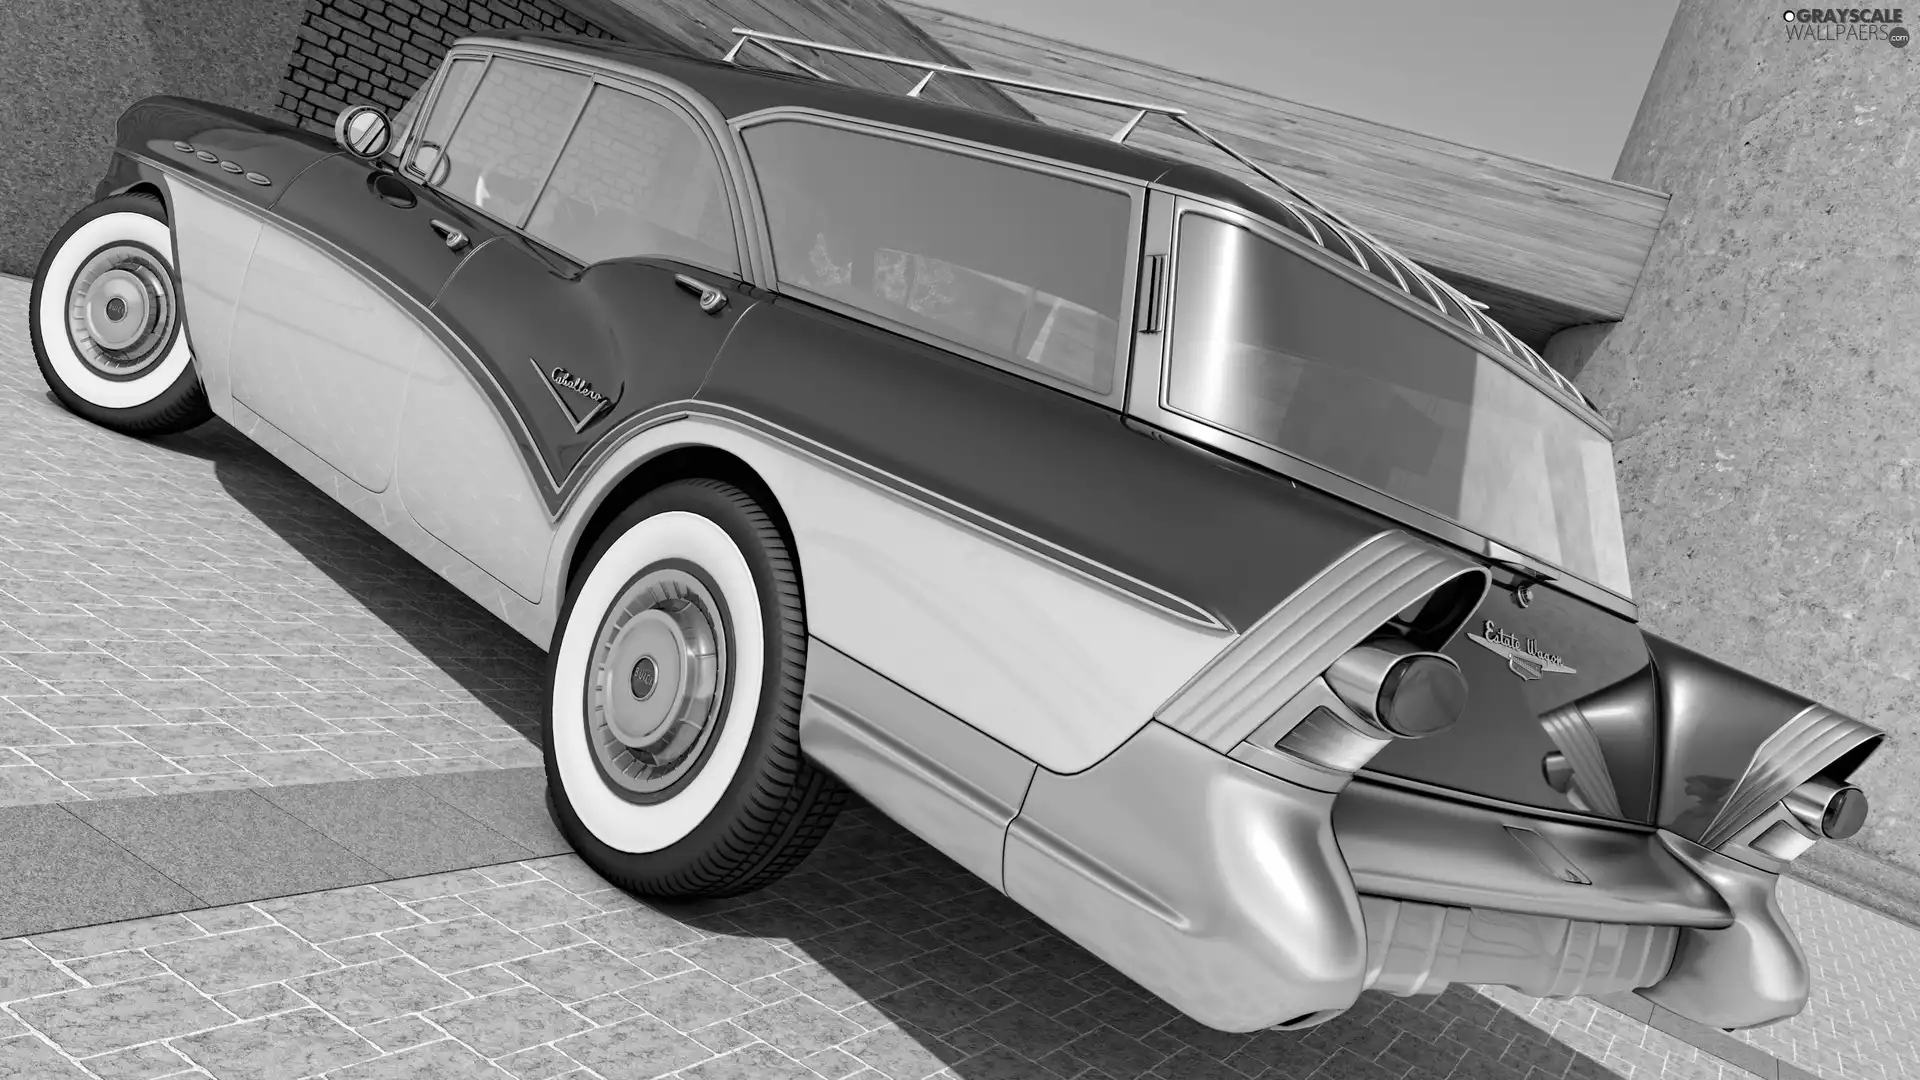 Buick Century Caballero Wagon, Jenny Jones